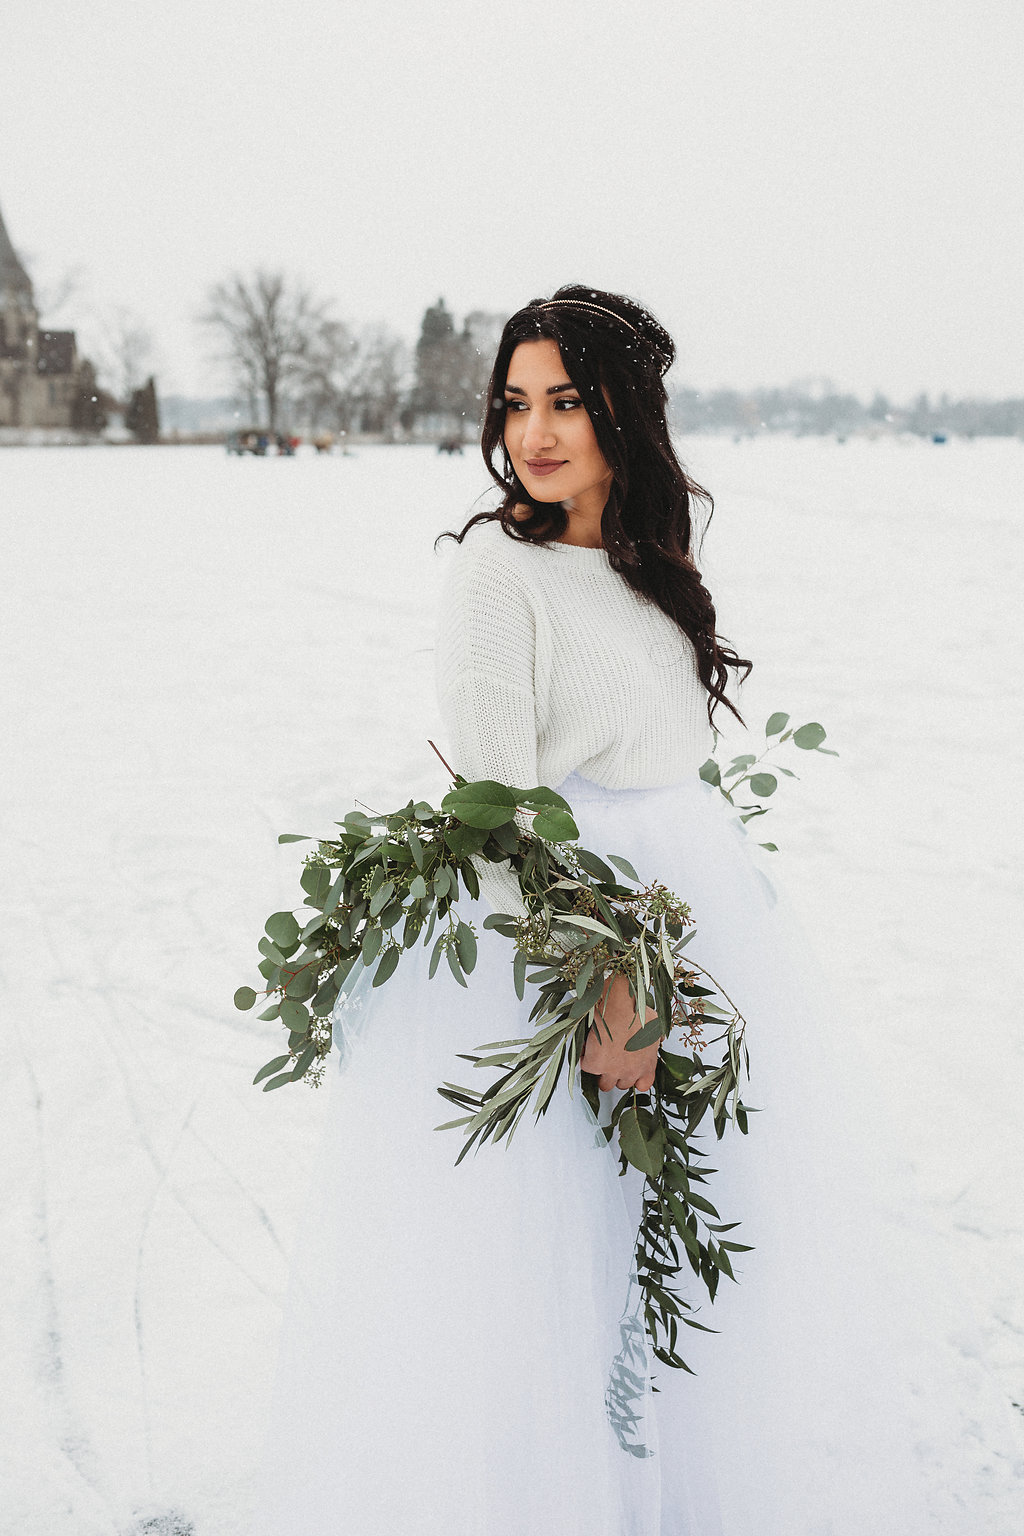 Bank of Flowers: Winter Wonderland Photoshoot